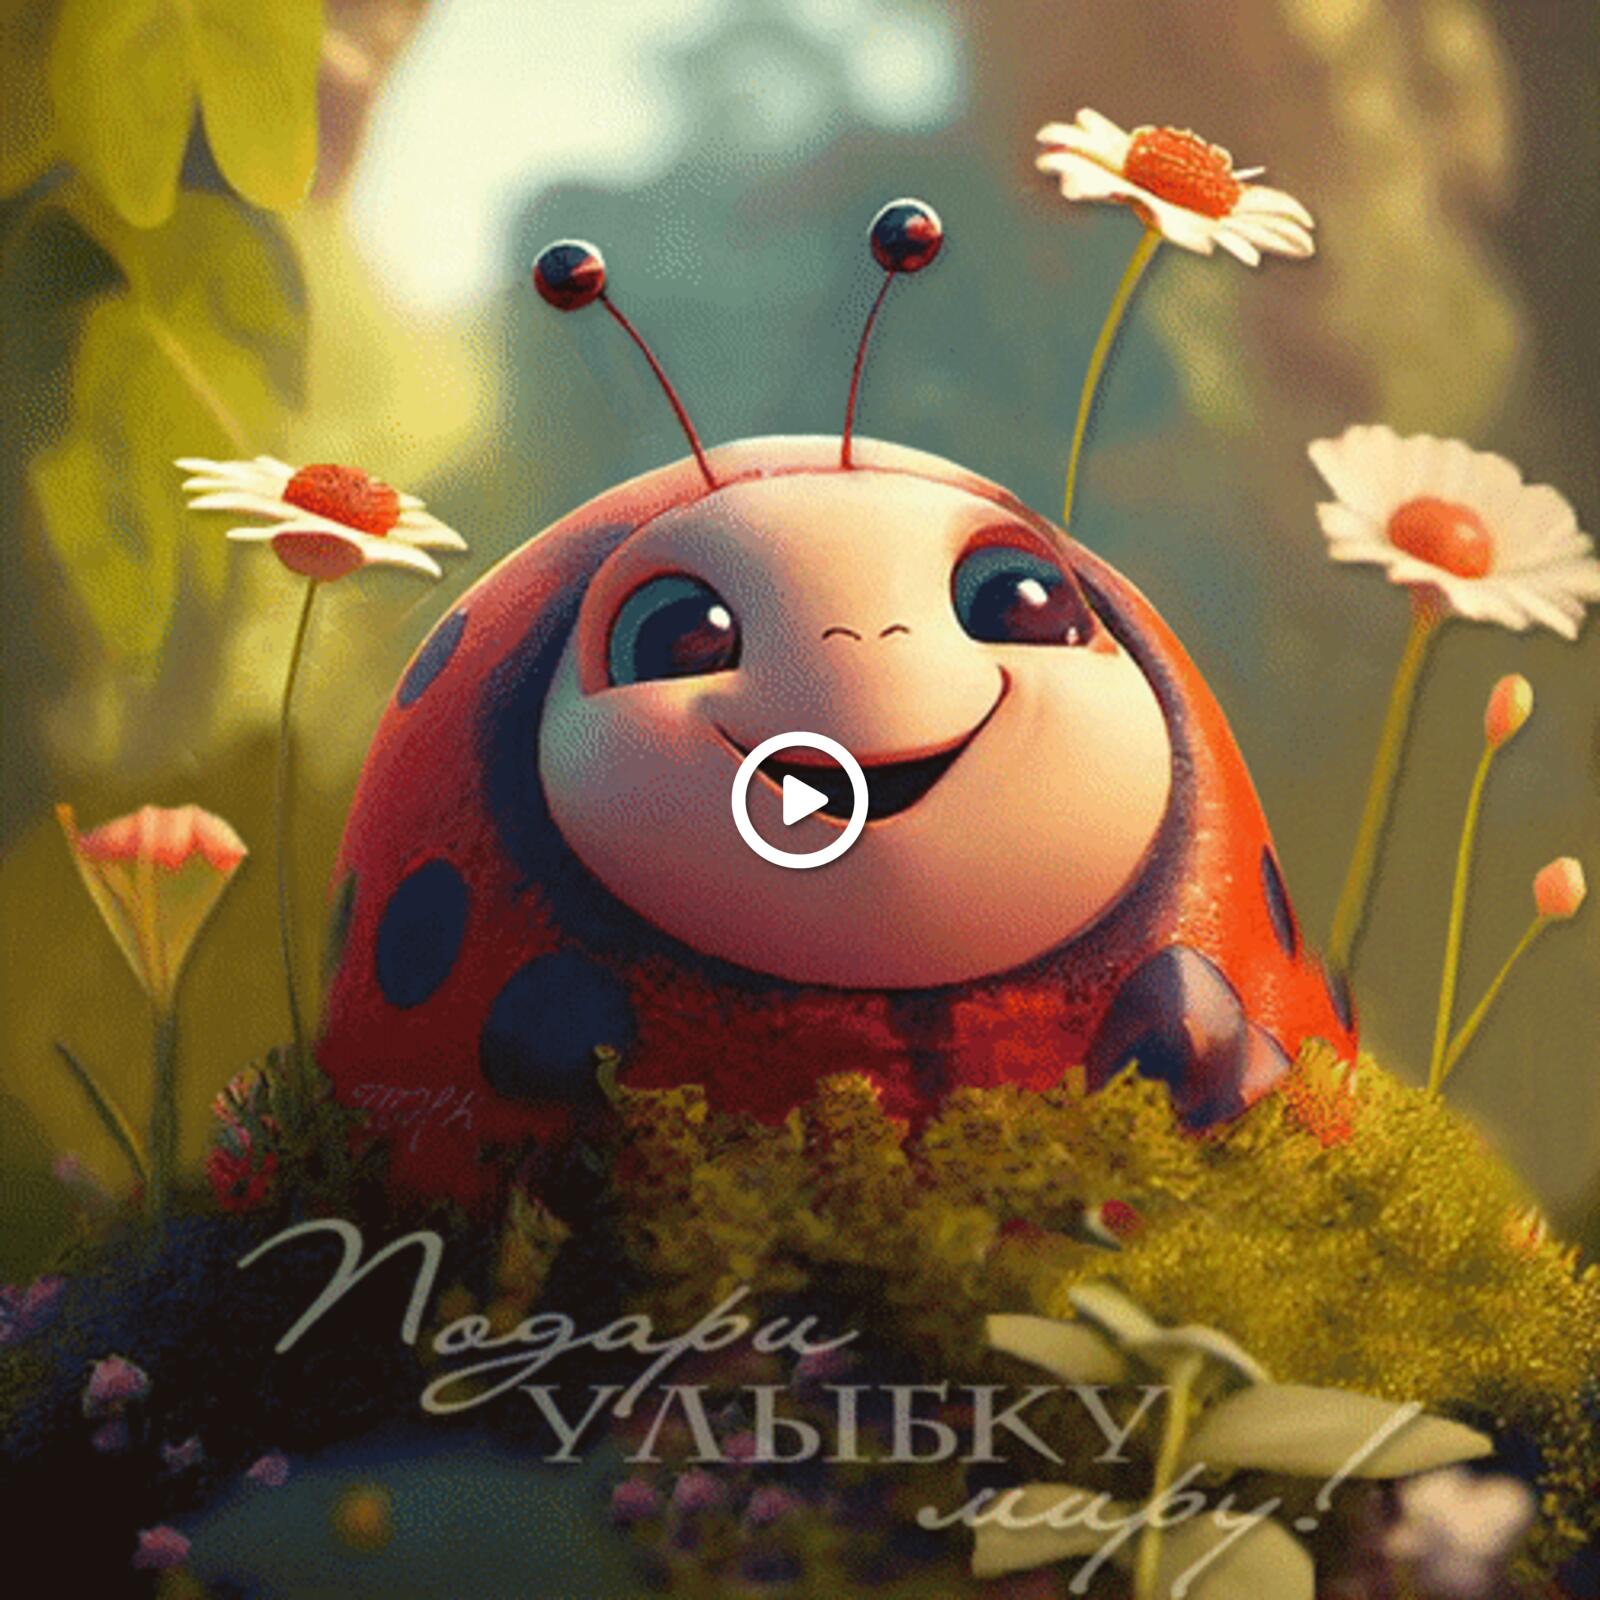 Animated ladybug with text Give me a smile